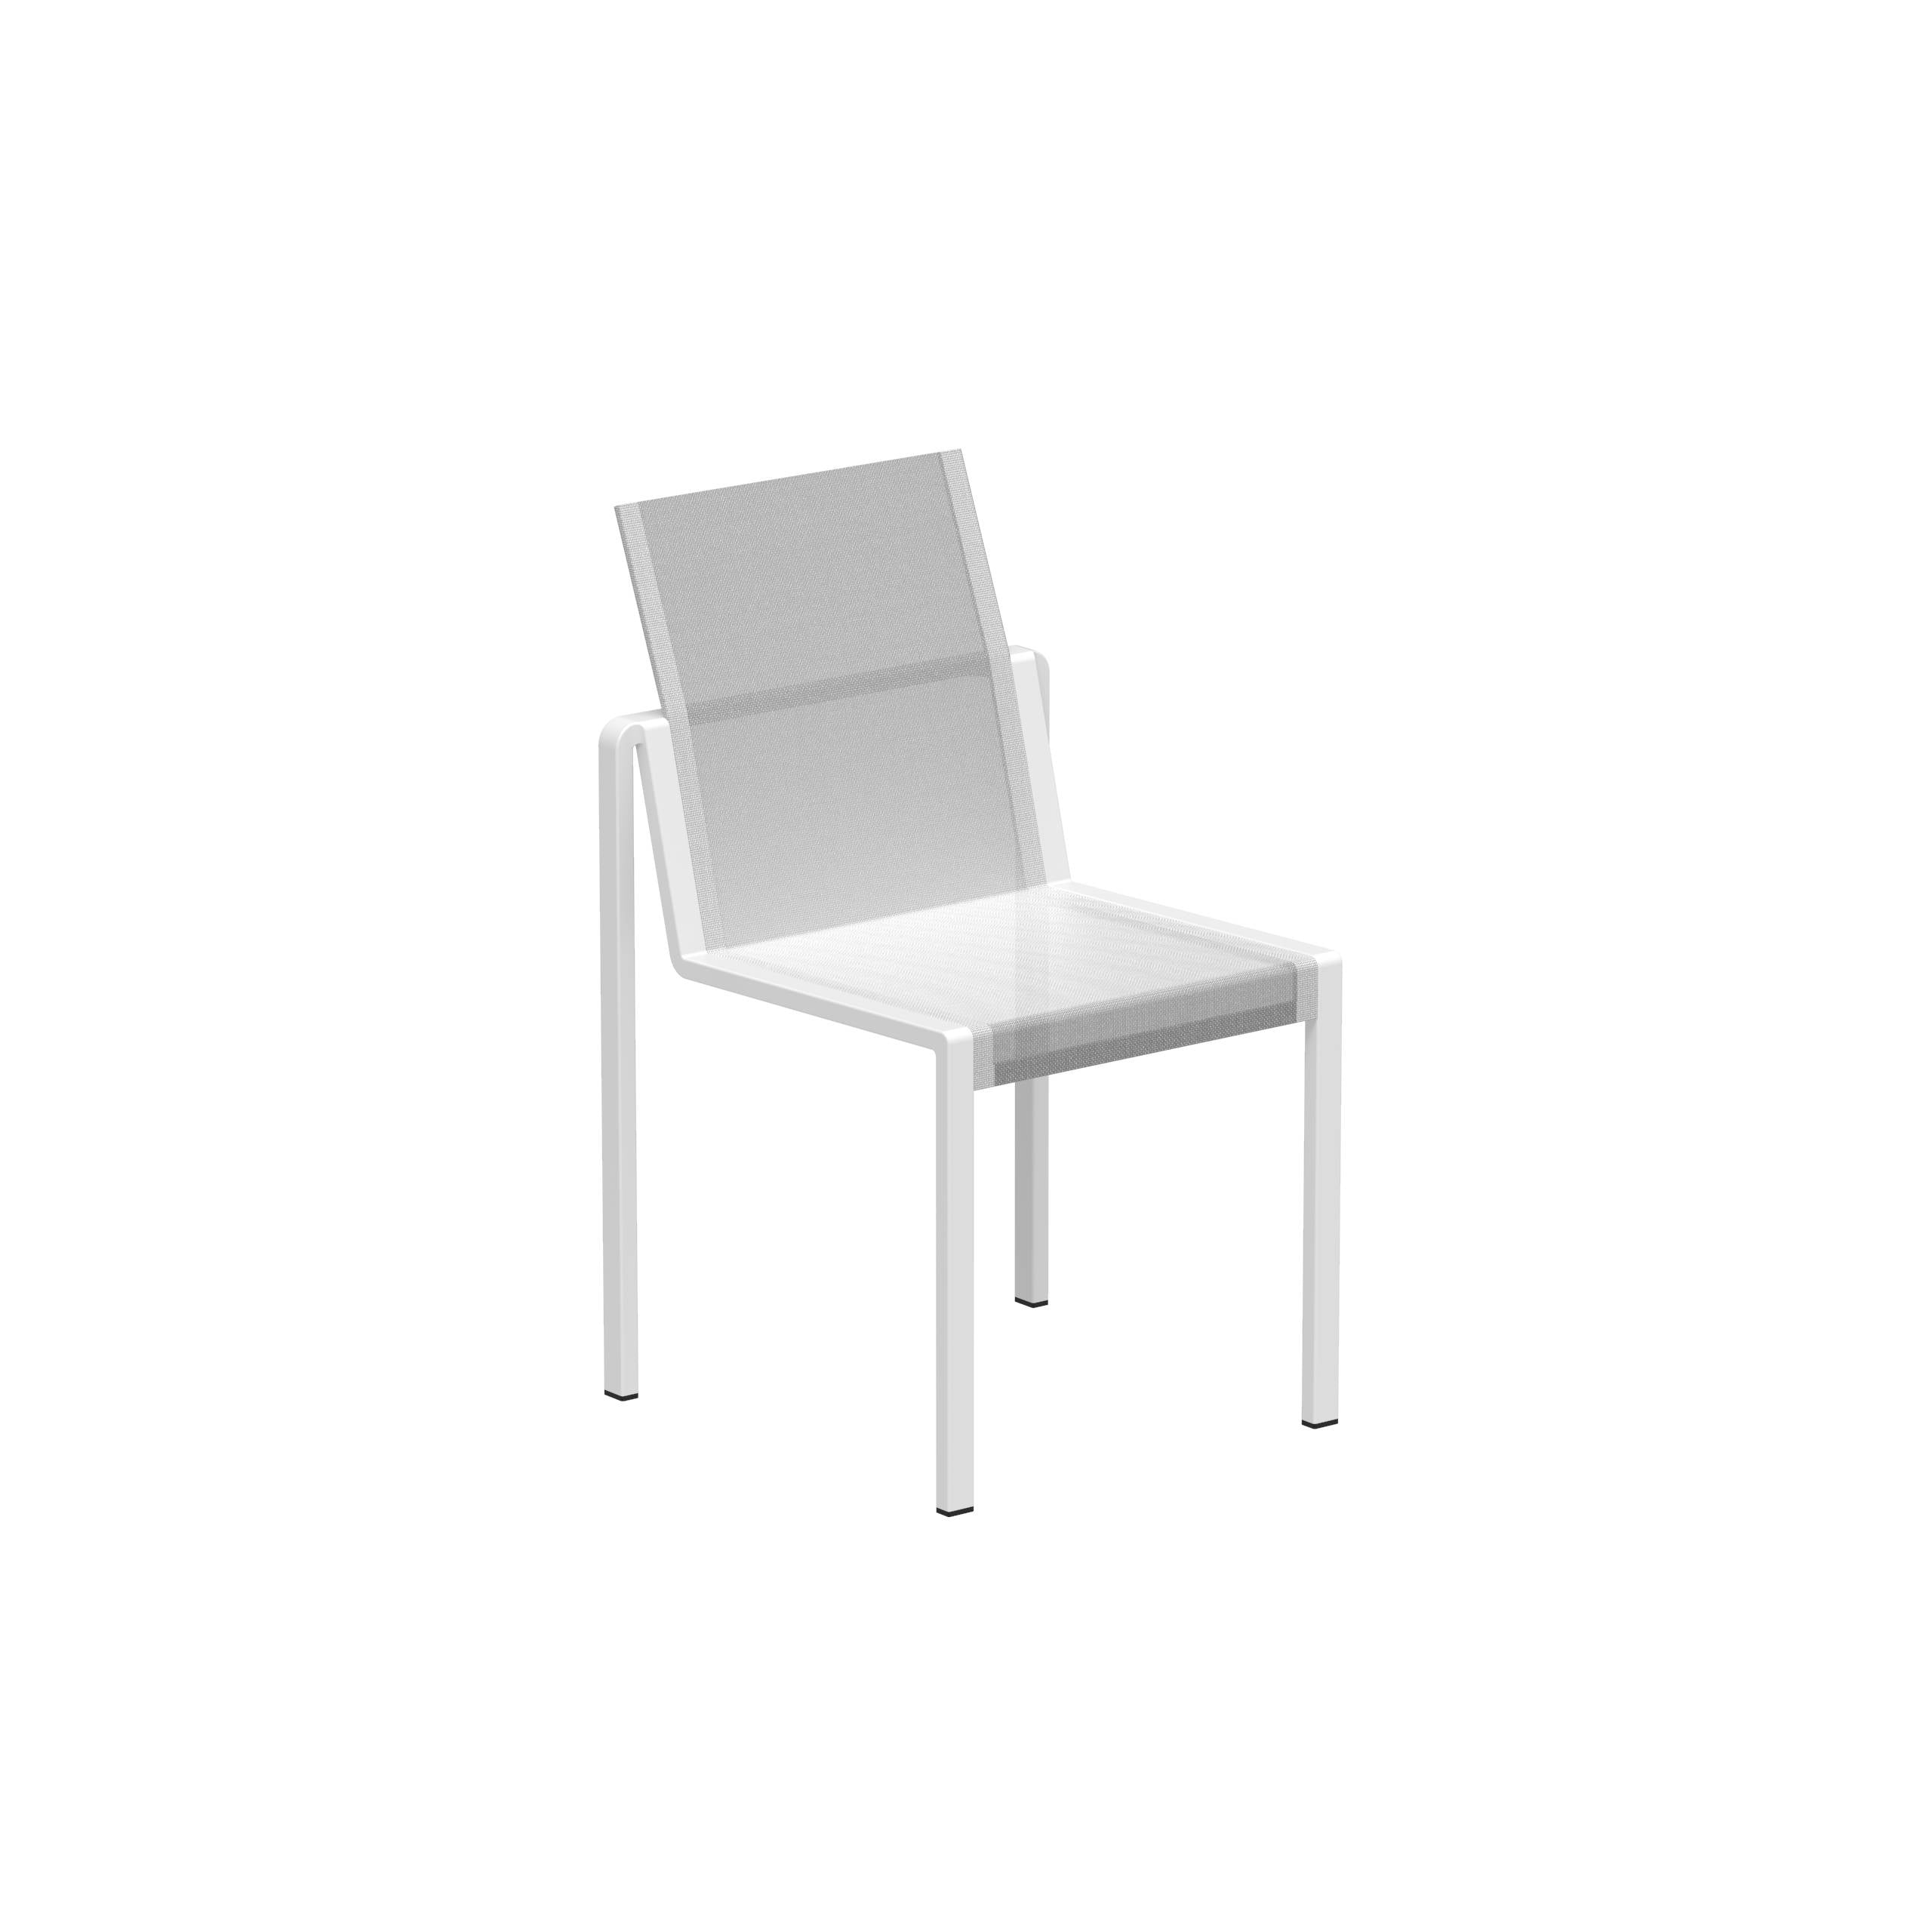 Alura Chair White With Batyline White